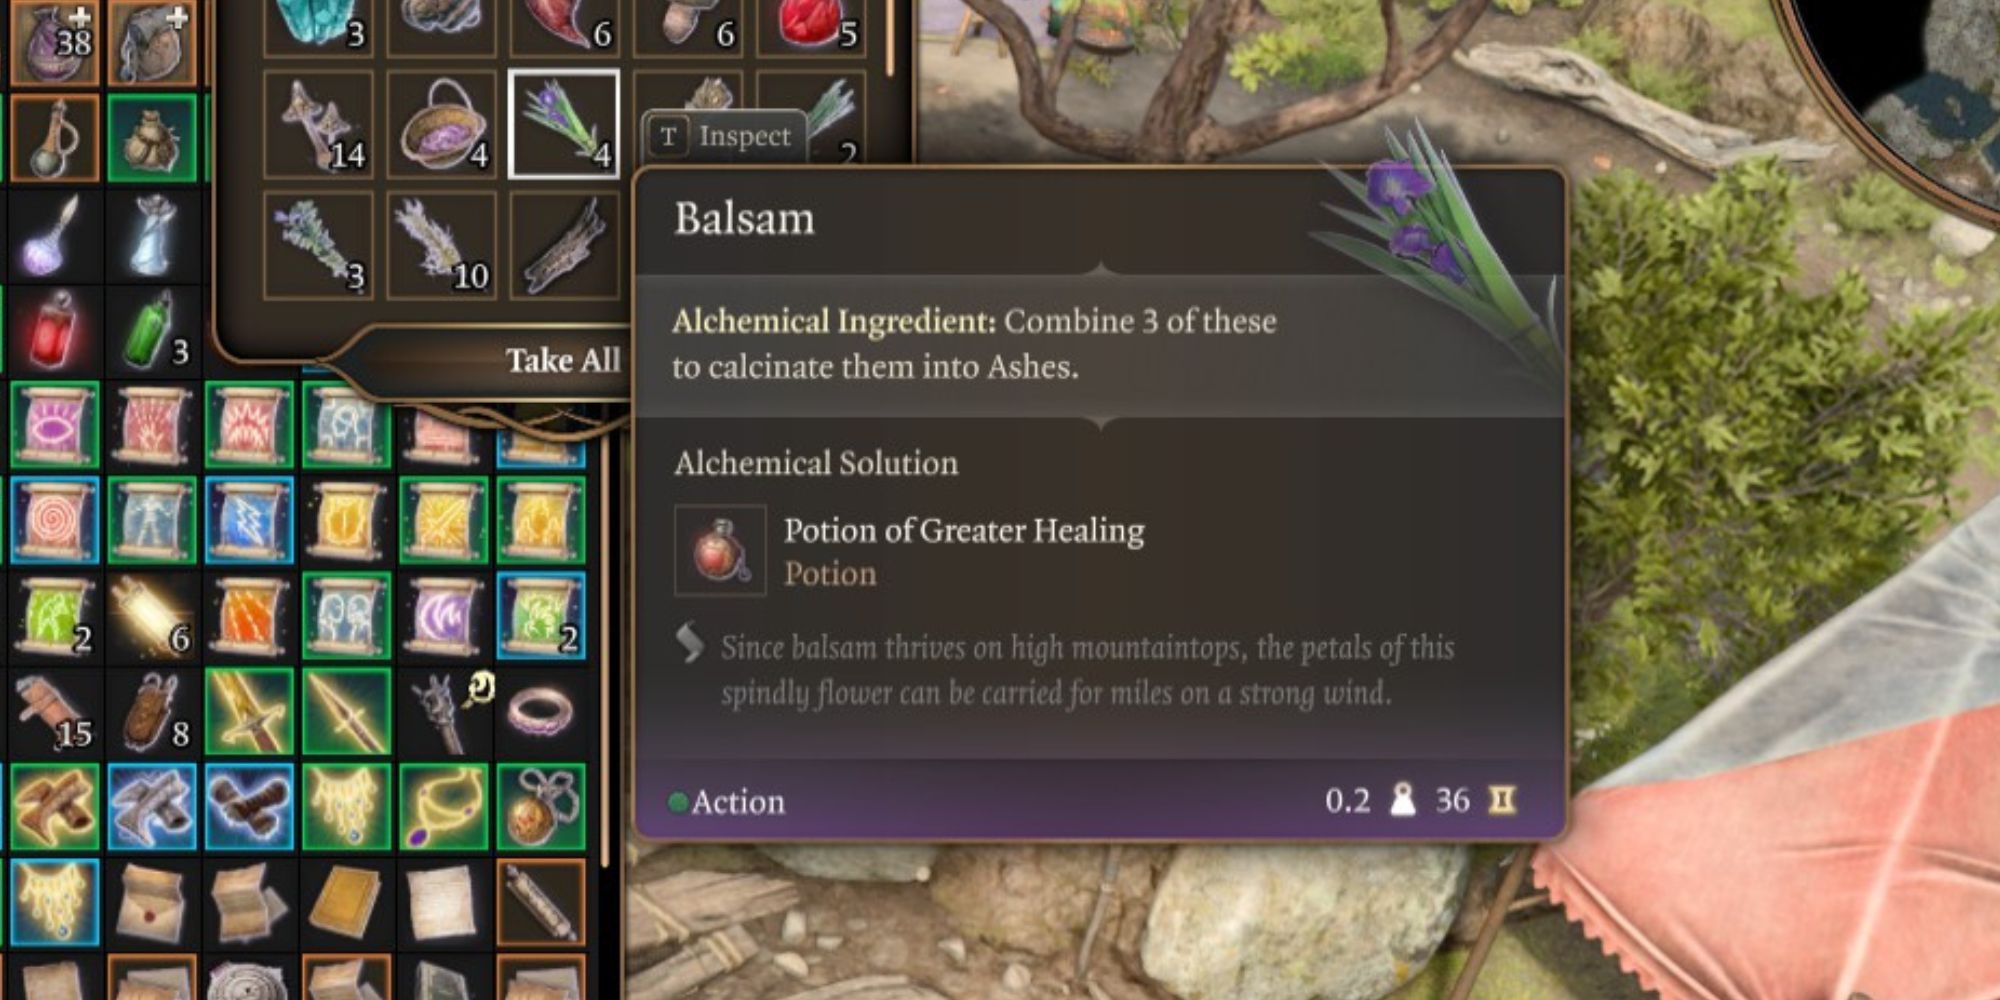 The alchemical ingredient Balsam in Baldur's Gate 3